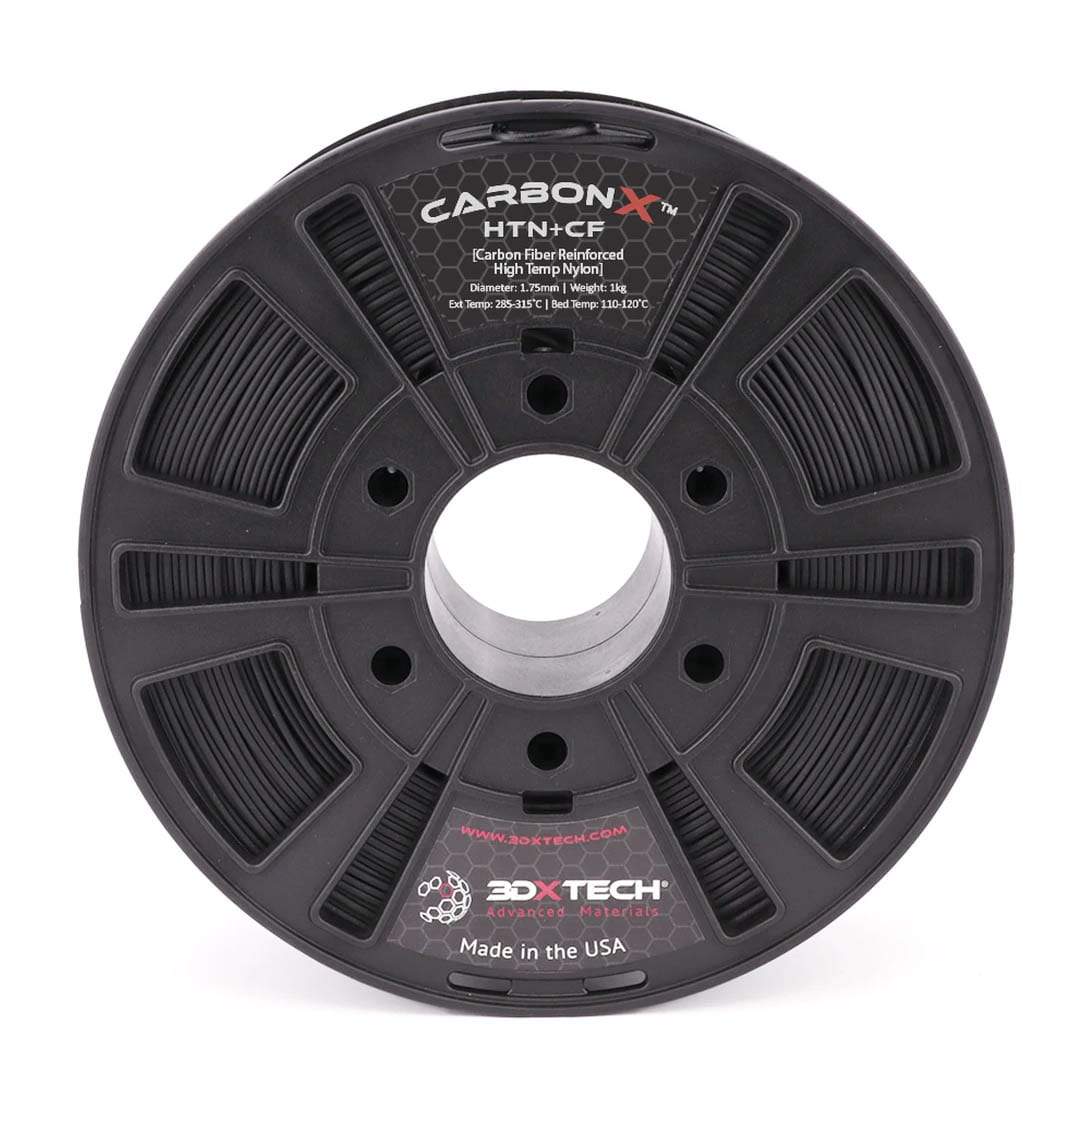 CarbonX™ HTN+CF [High Temp Nylon) PPA 500g 3DXTech Filament